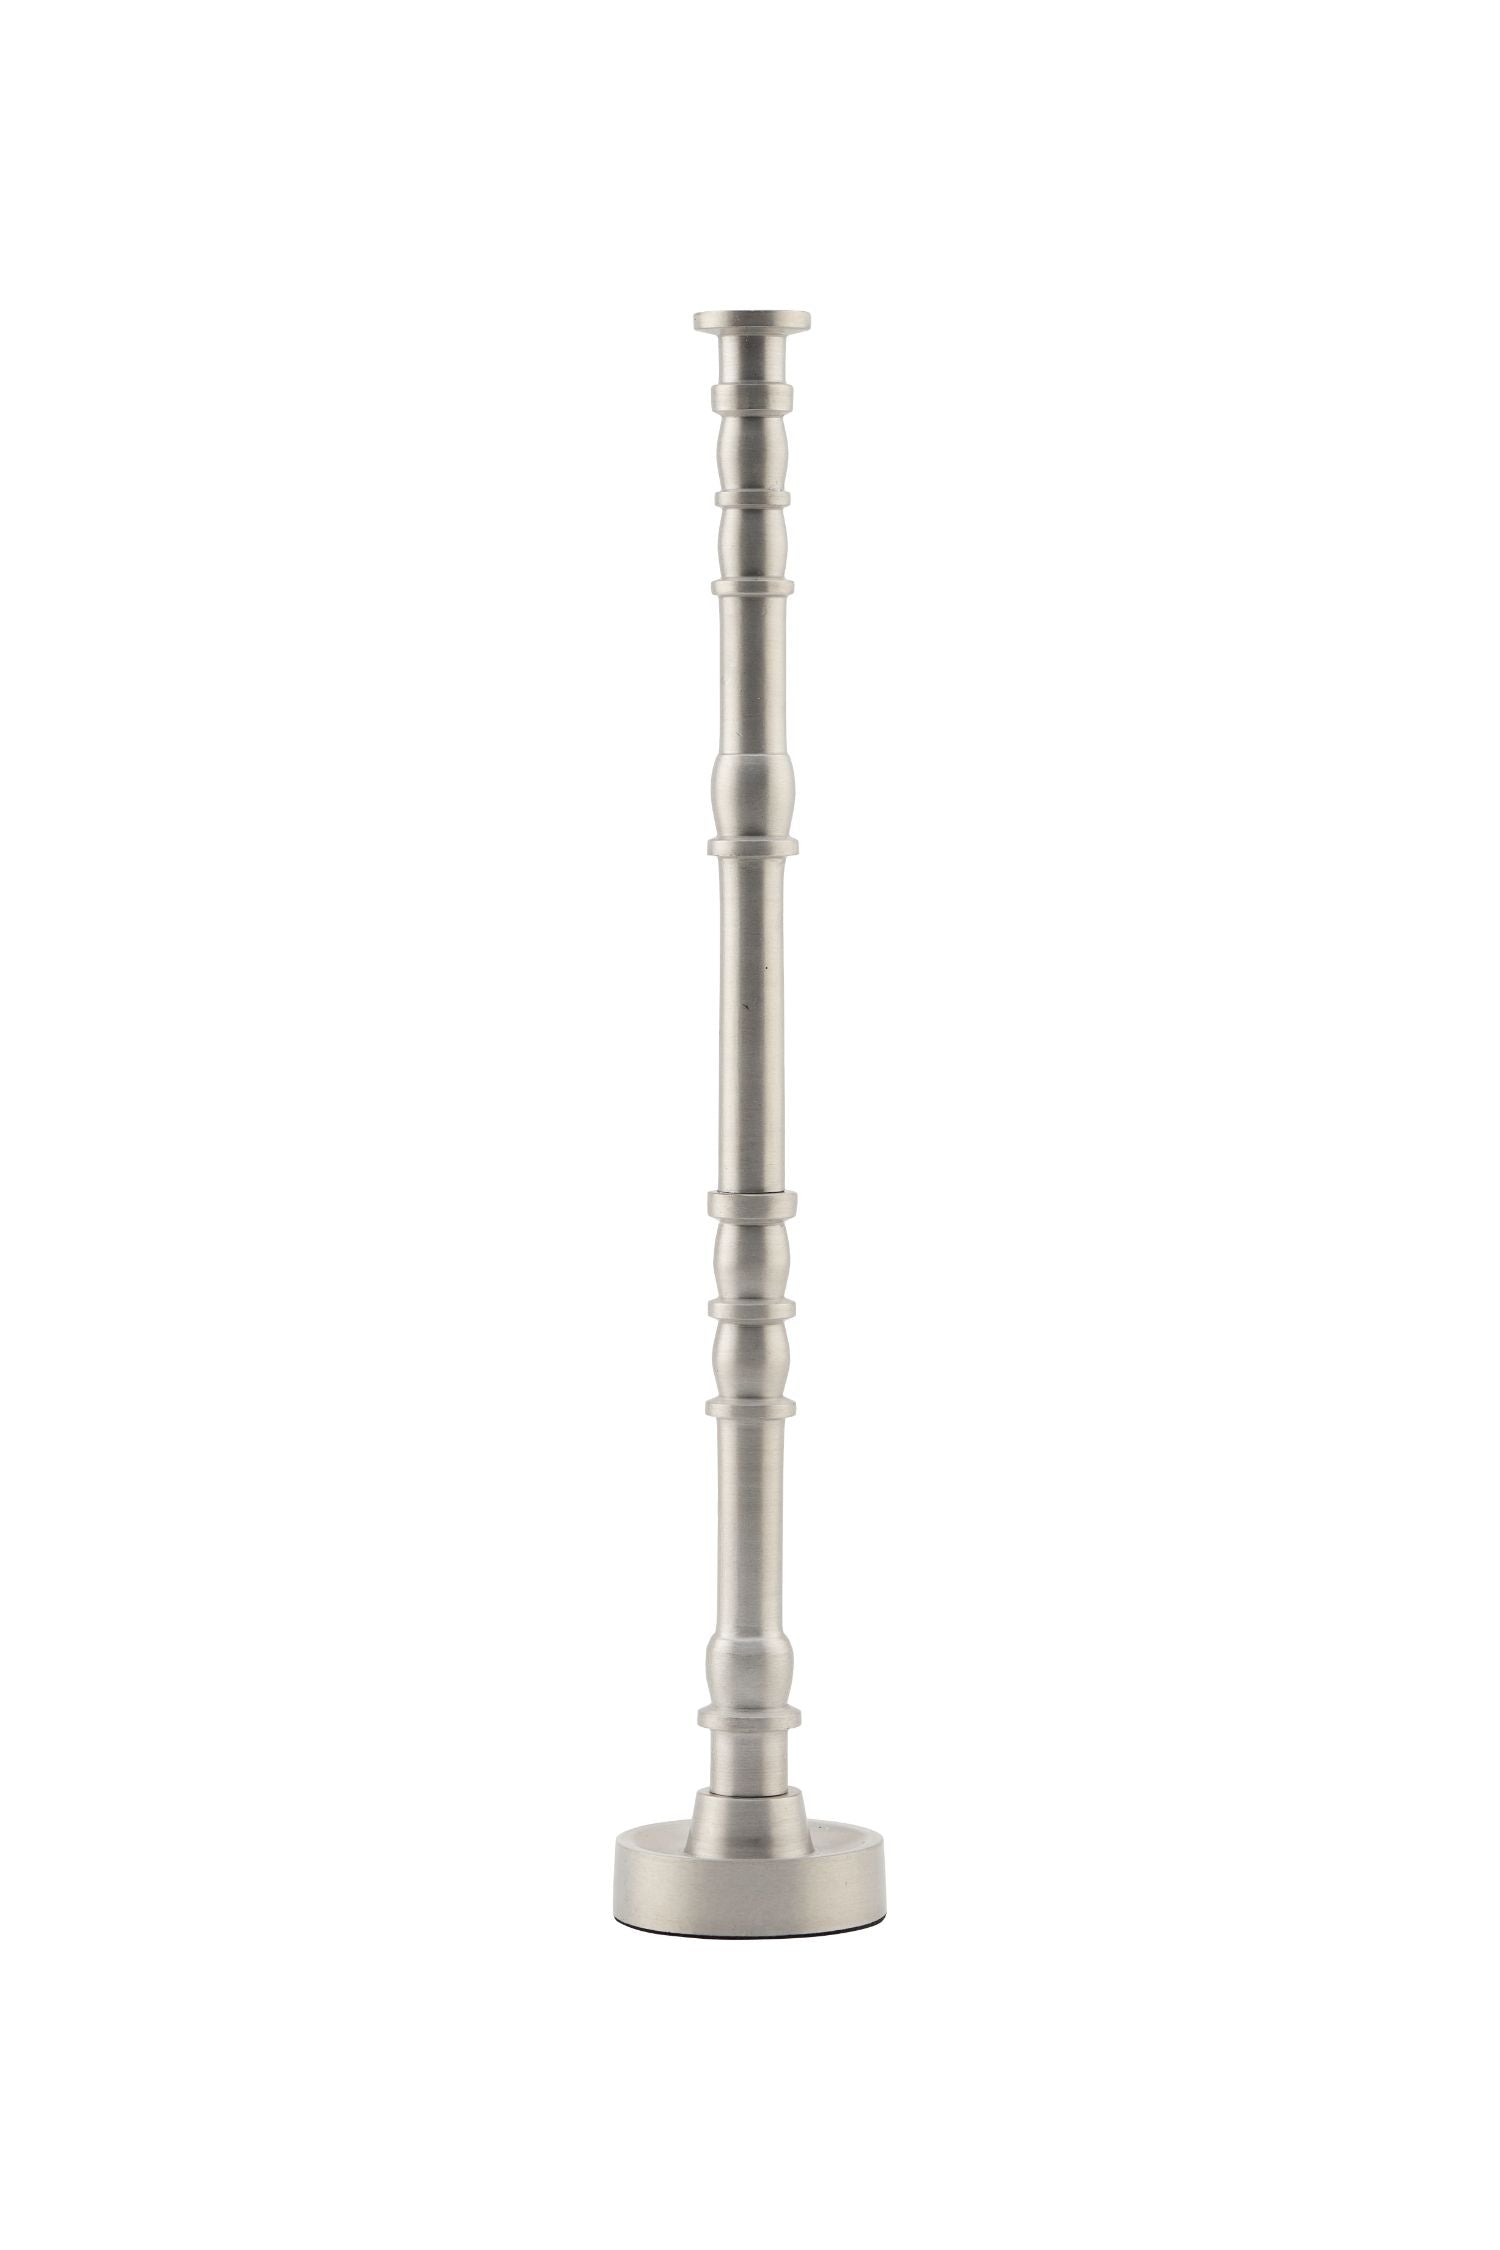 jersey candlestick 28cm